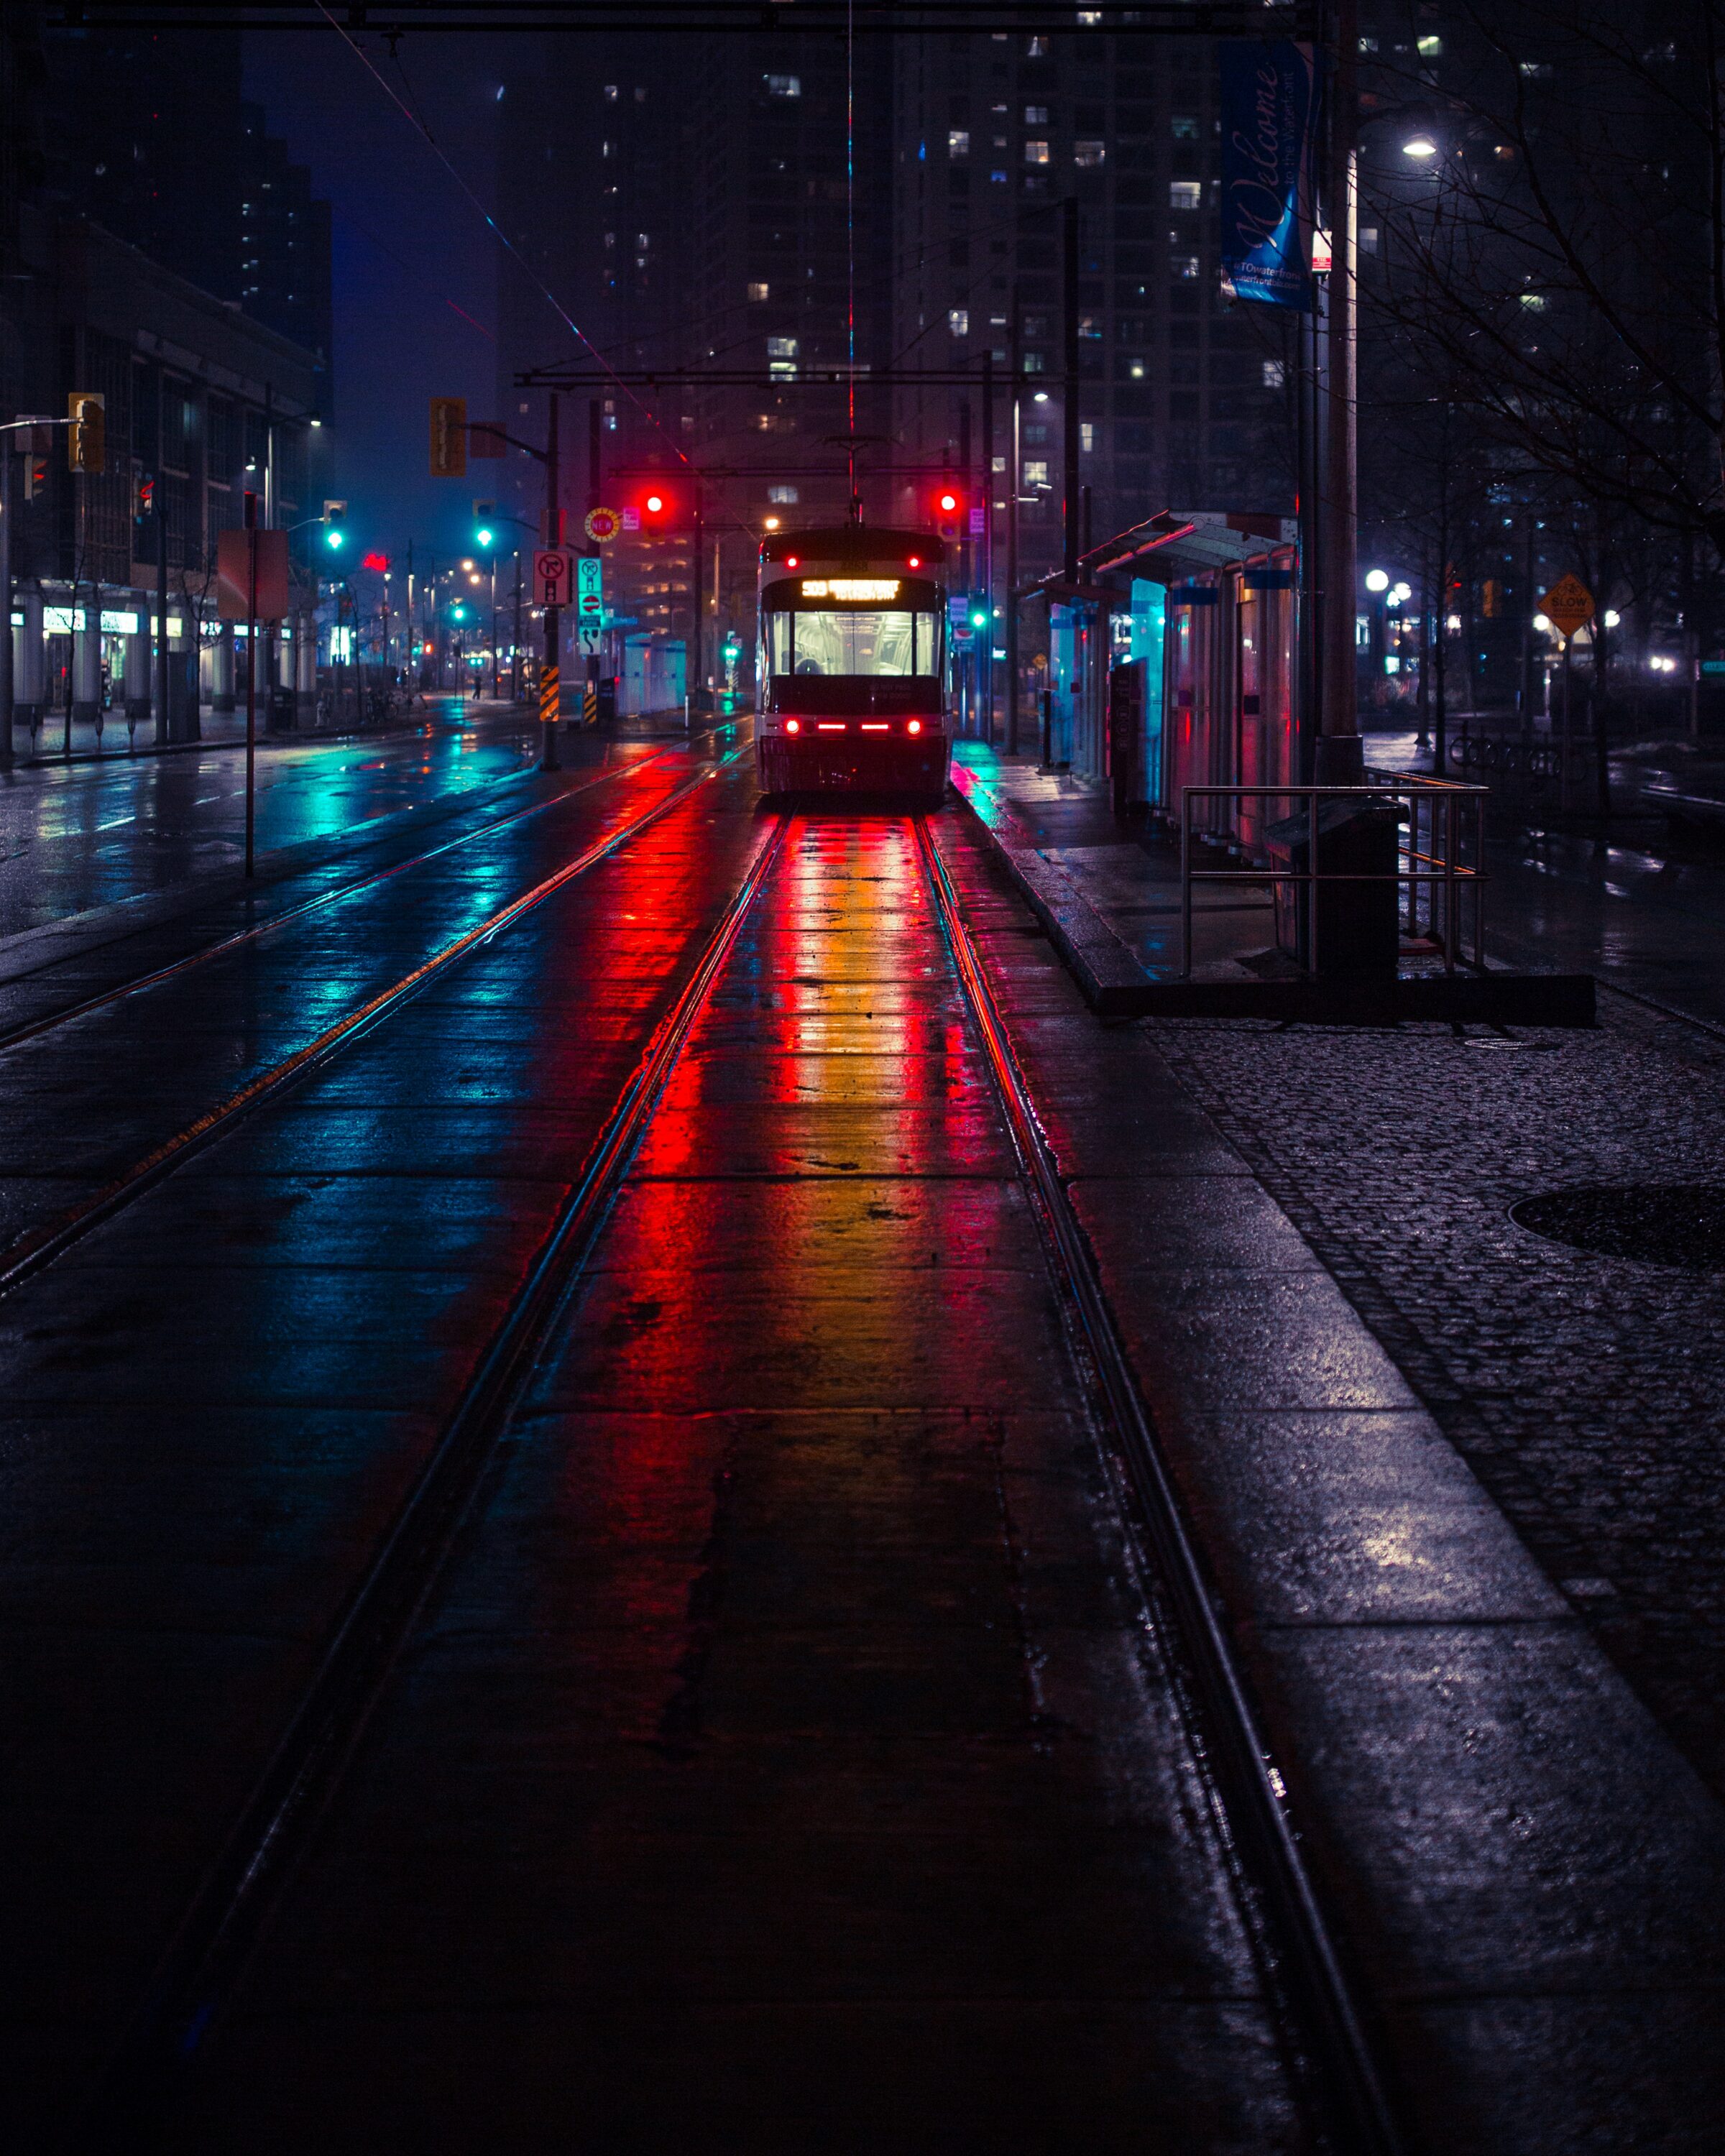 piblic transportation at night in Toronto